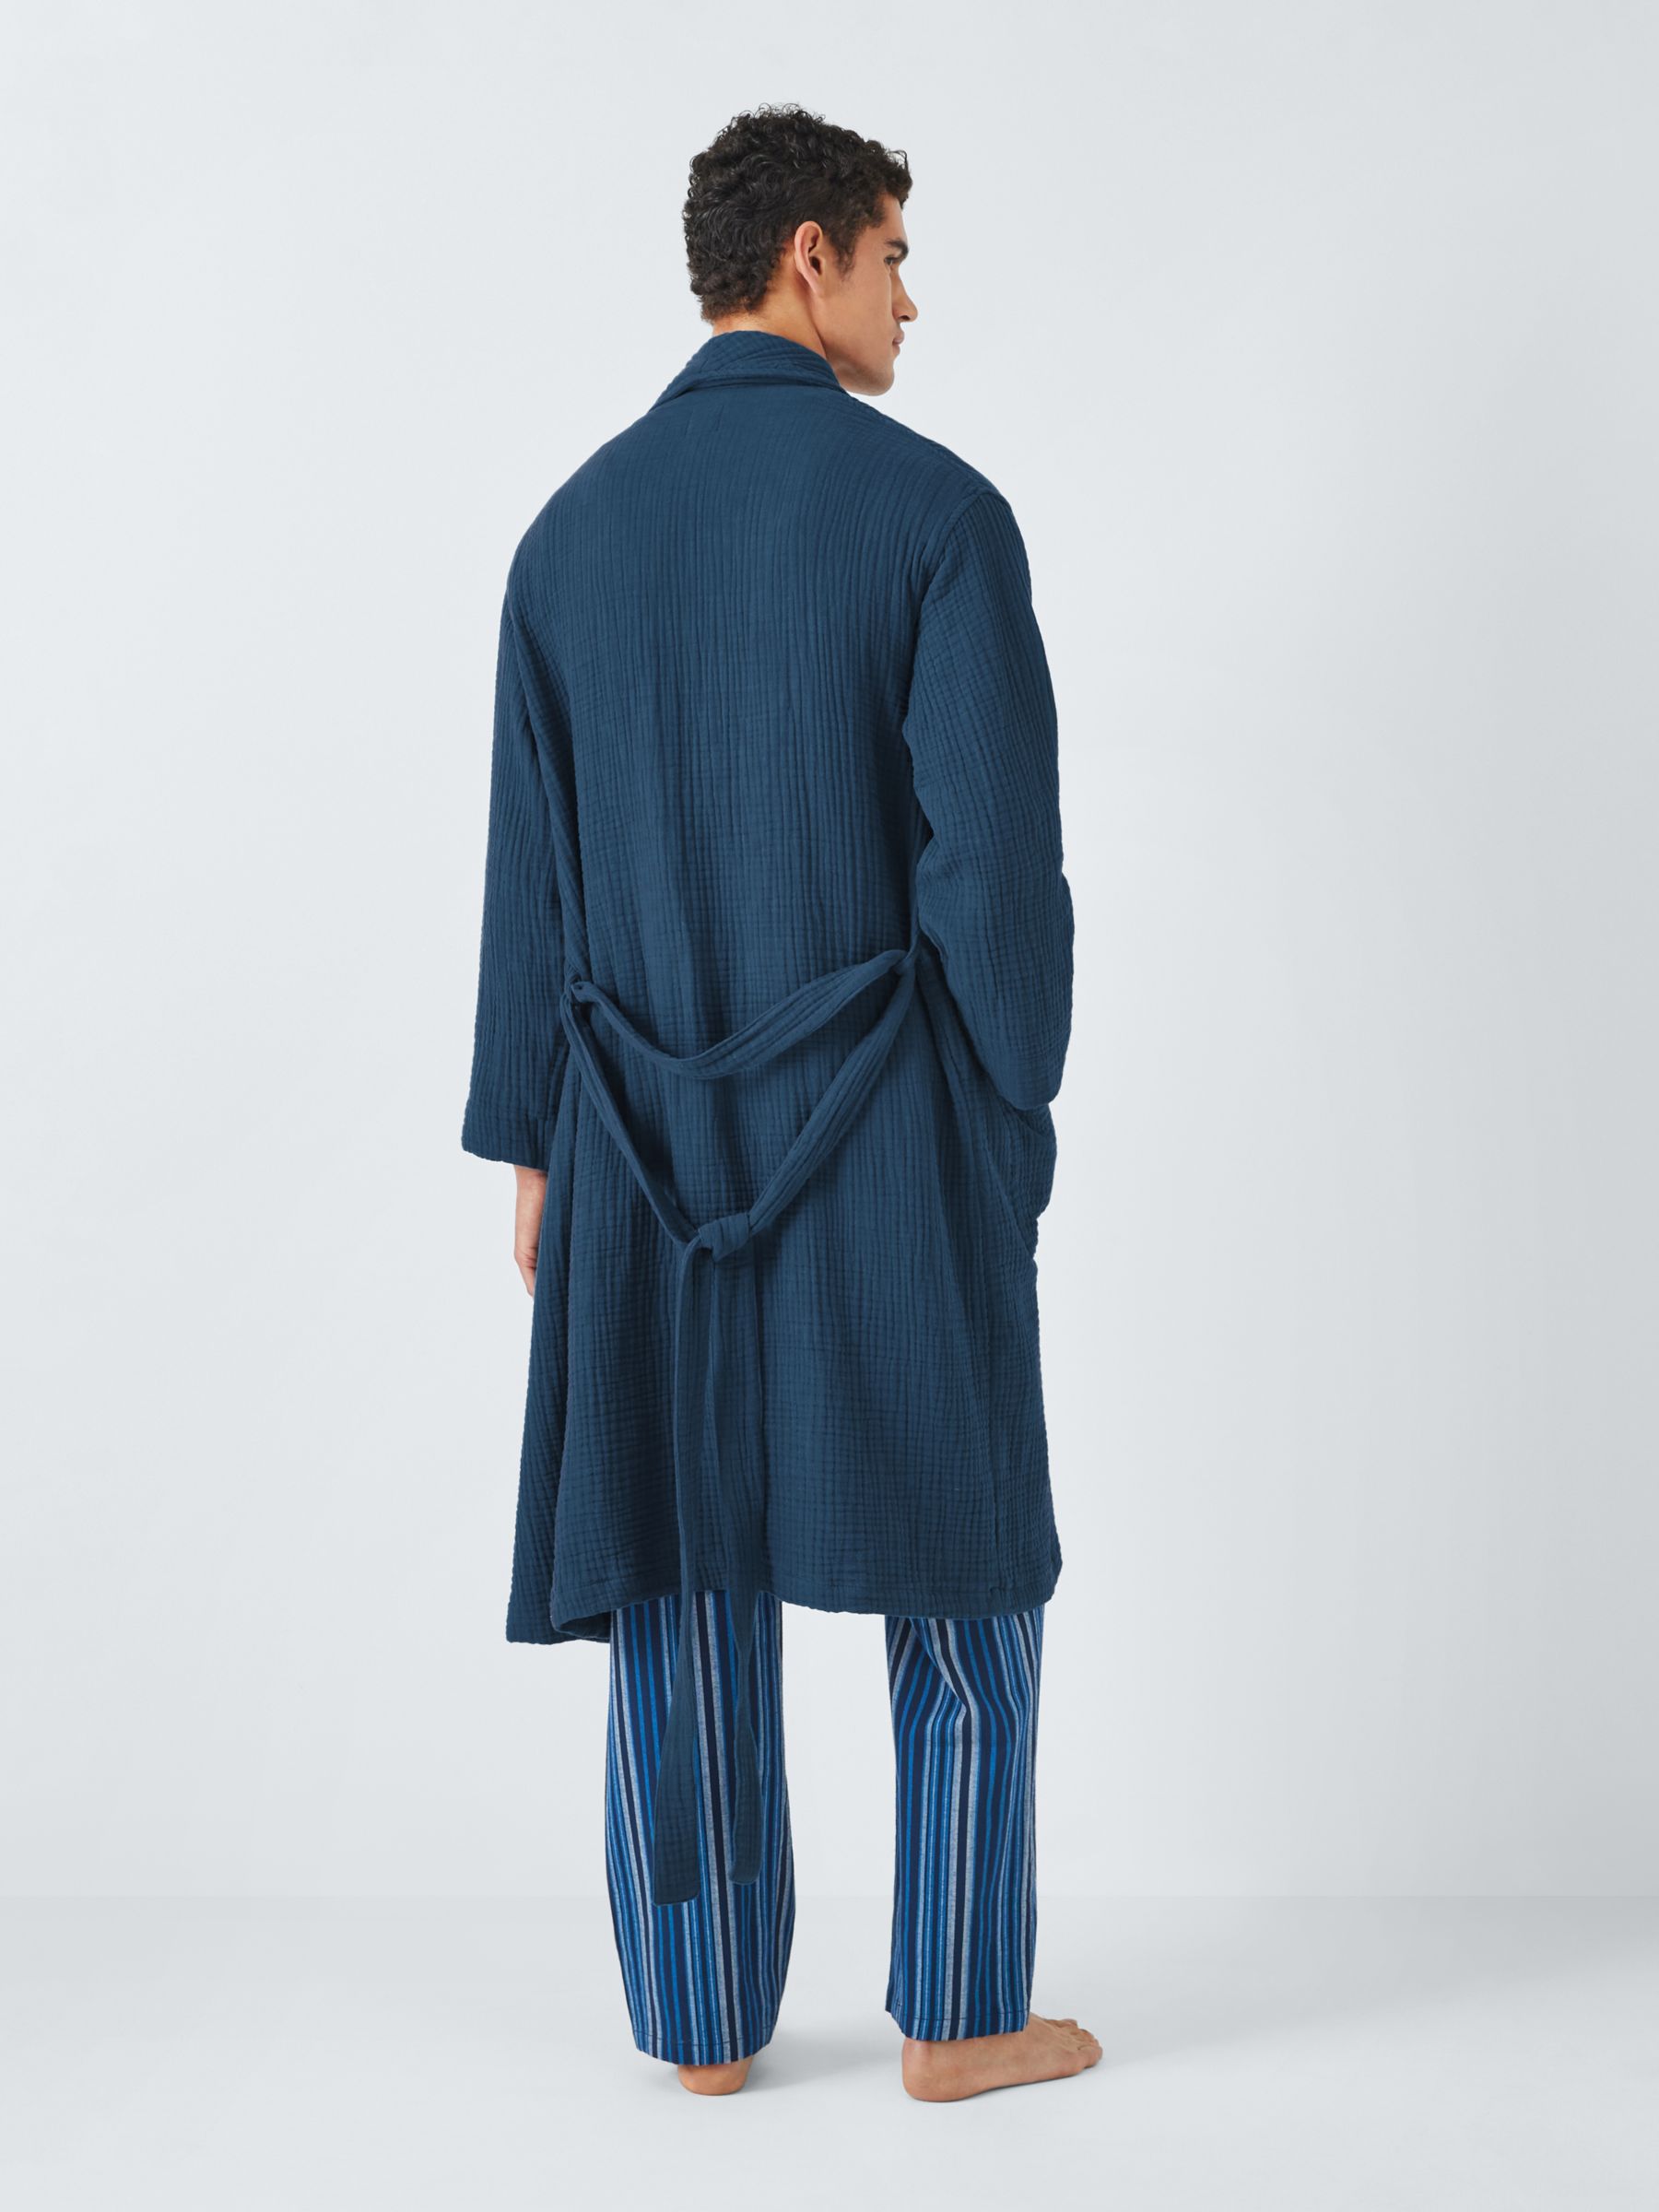 John Lewis Cotton Muslin Robe, Blue, M